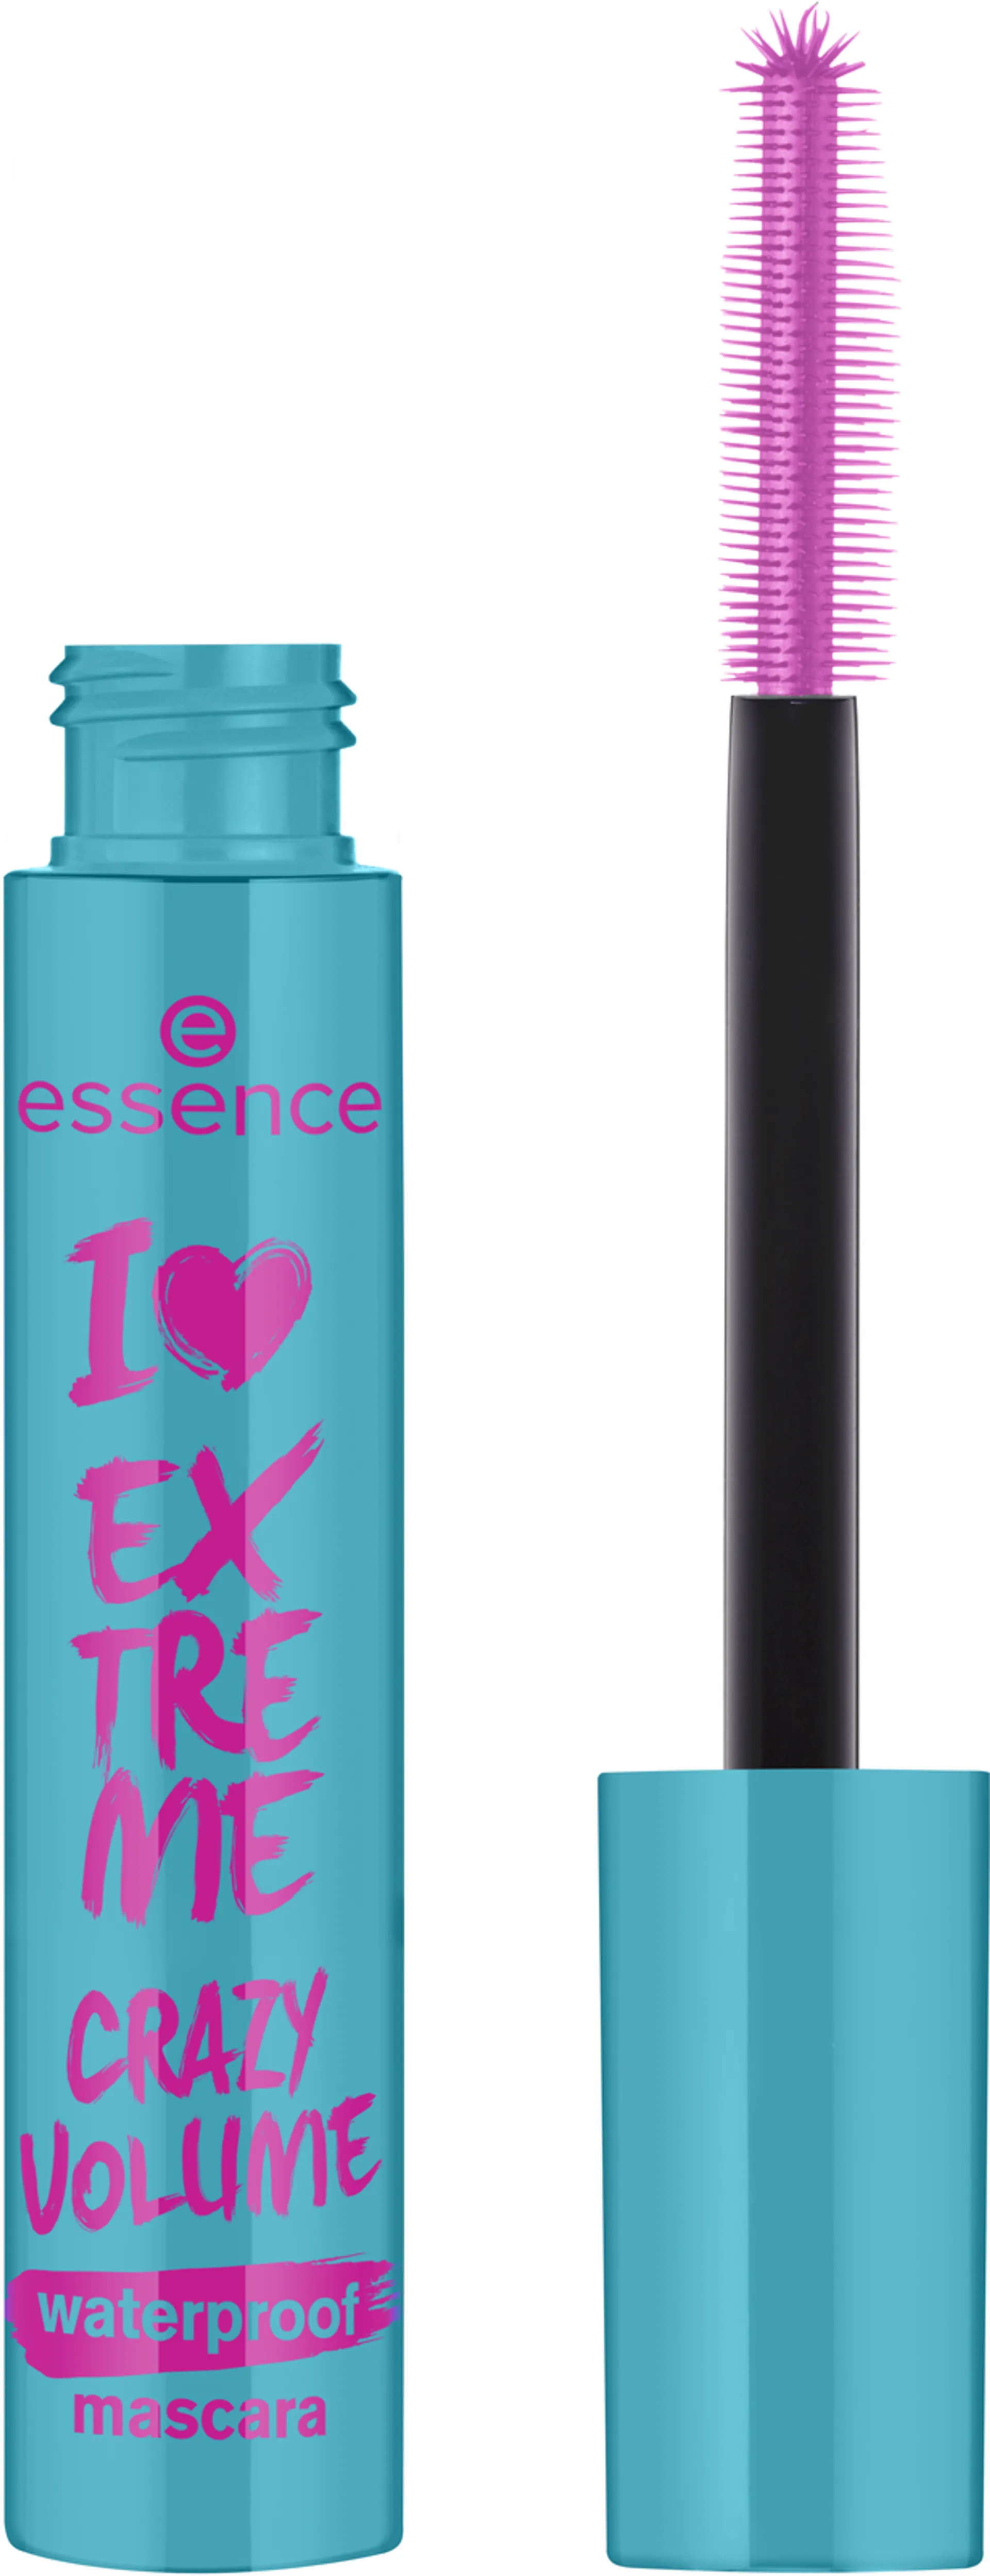 essence I LOVE EXTREME CRAZY VOLUME waterproof mascara vedenkestävä ripsiväri 12 ml - 1